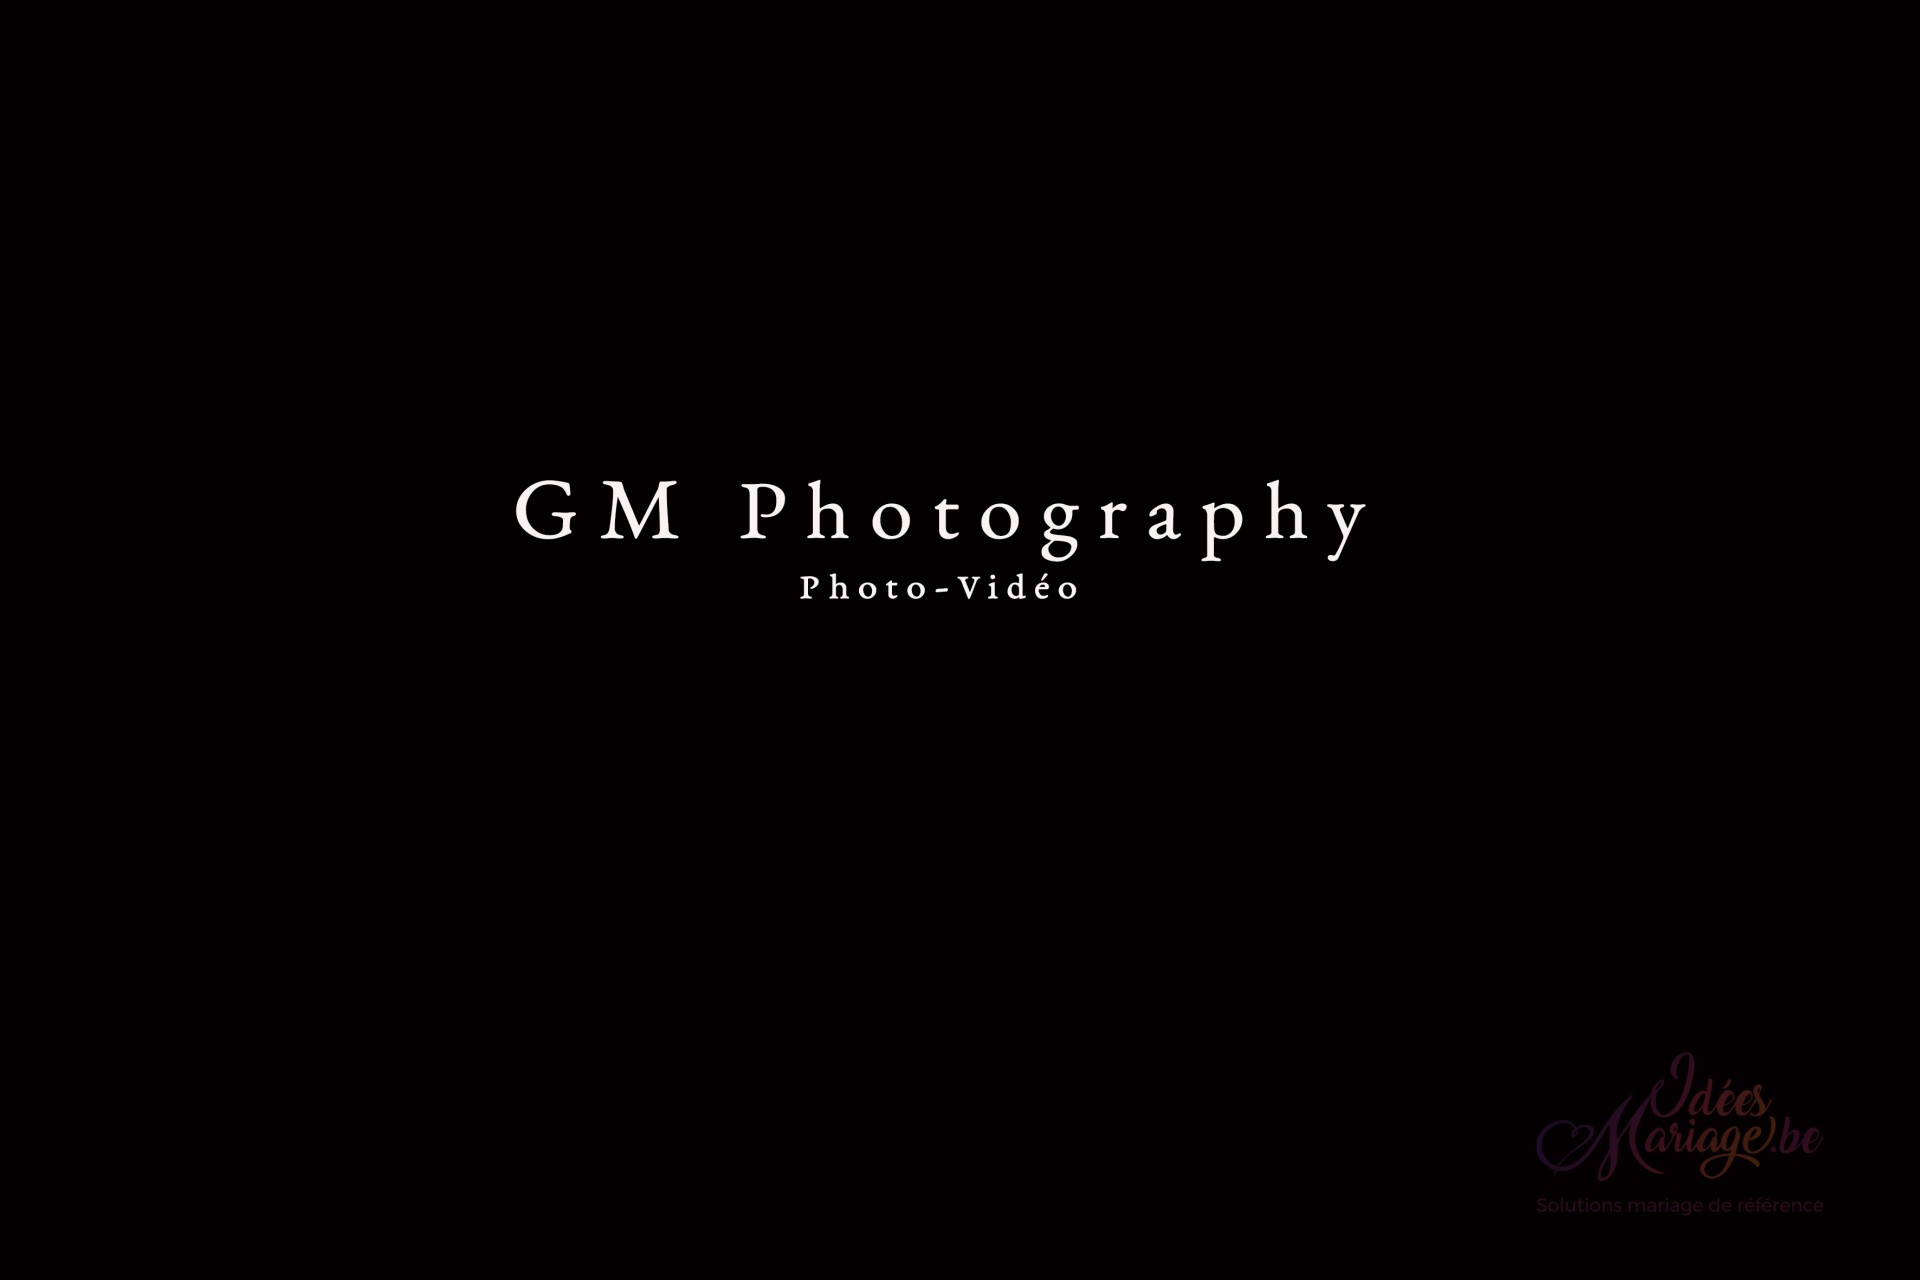 GM Photography